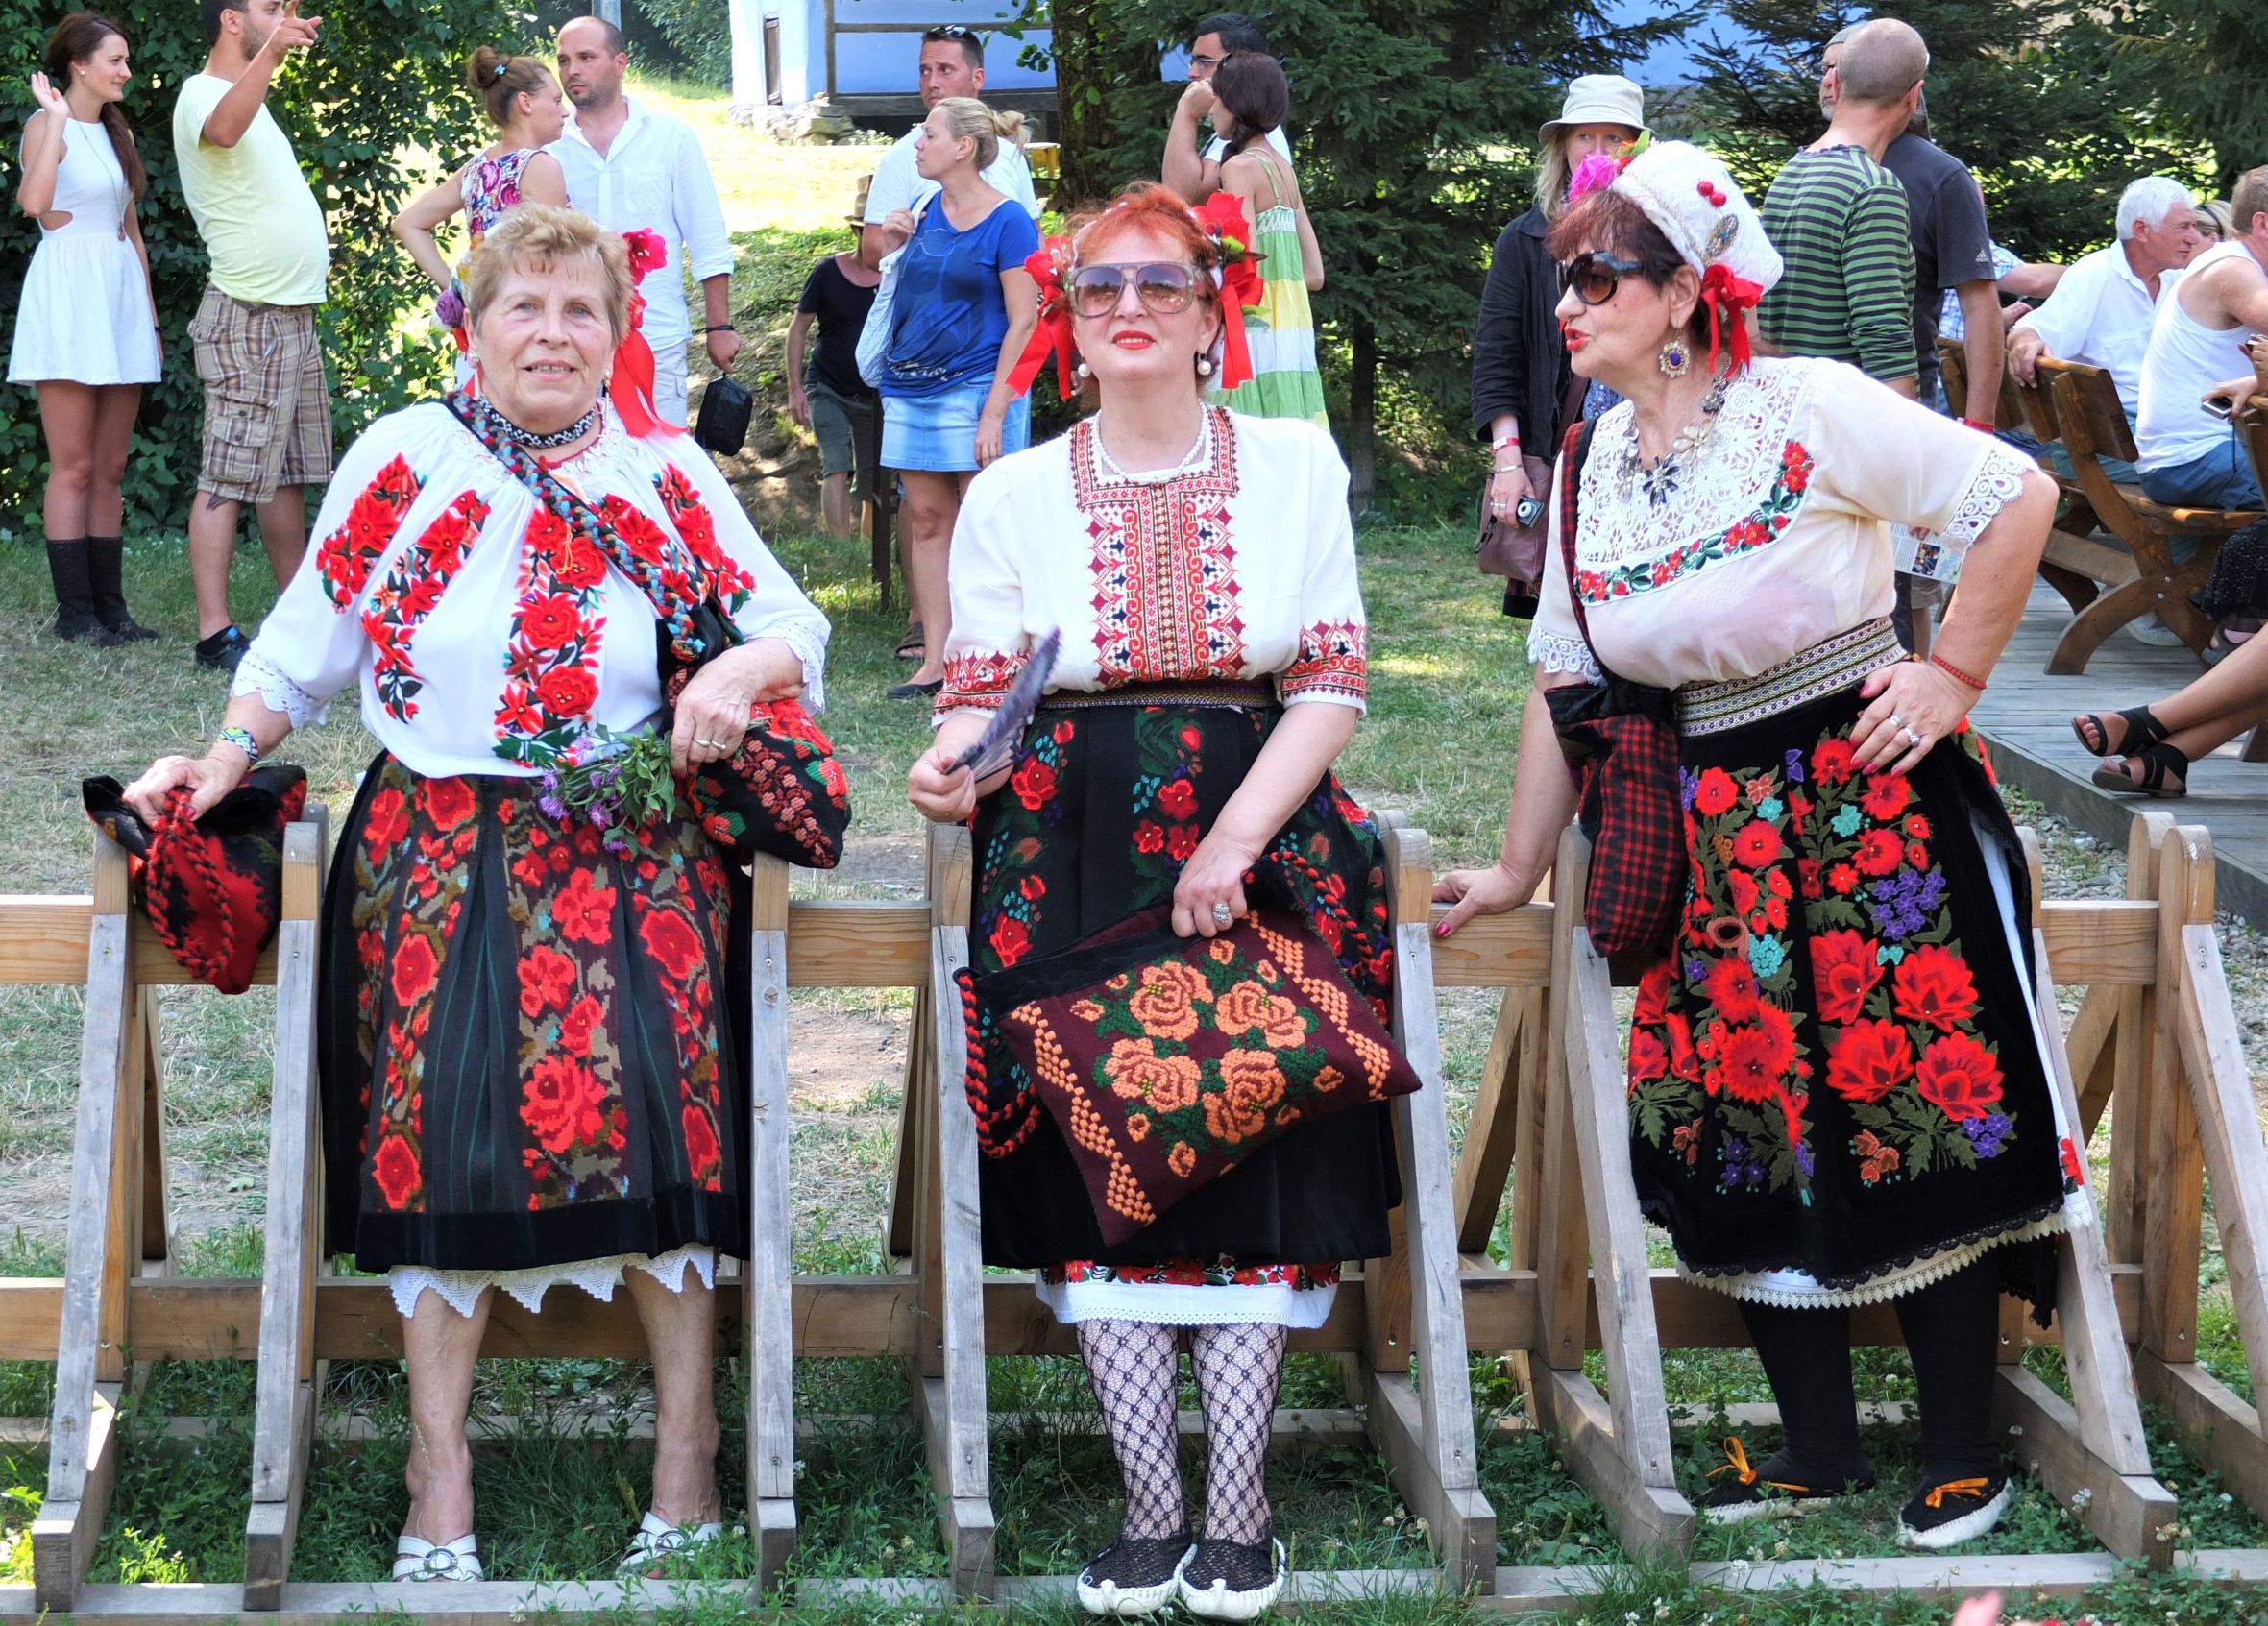 Three women in traditional Romanian costume